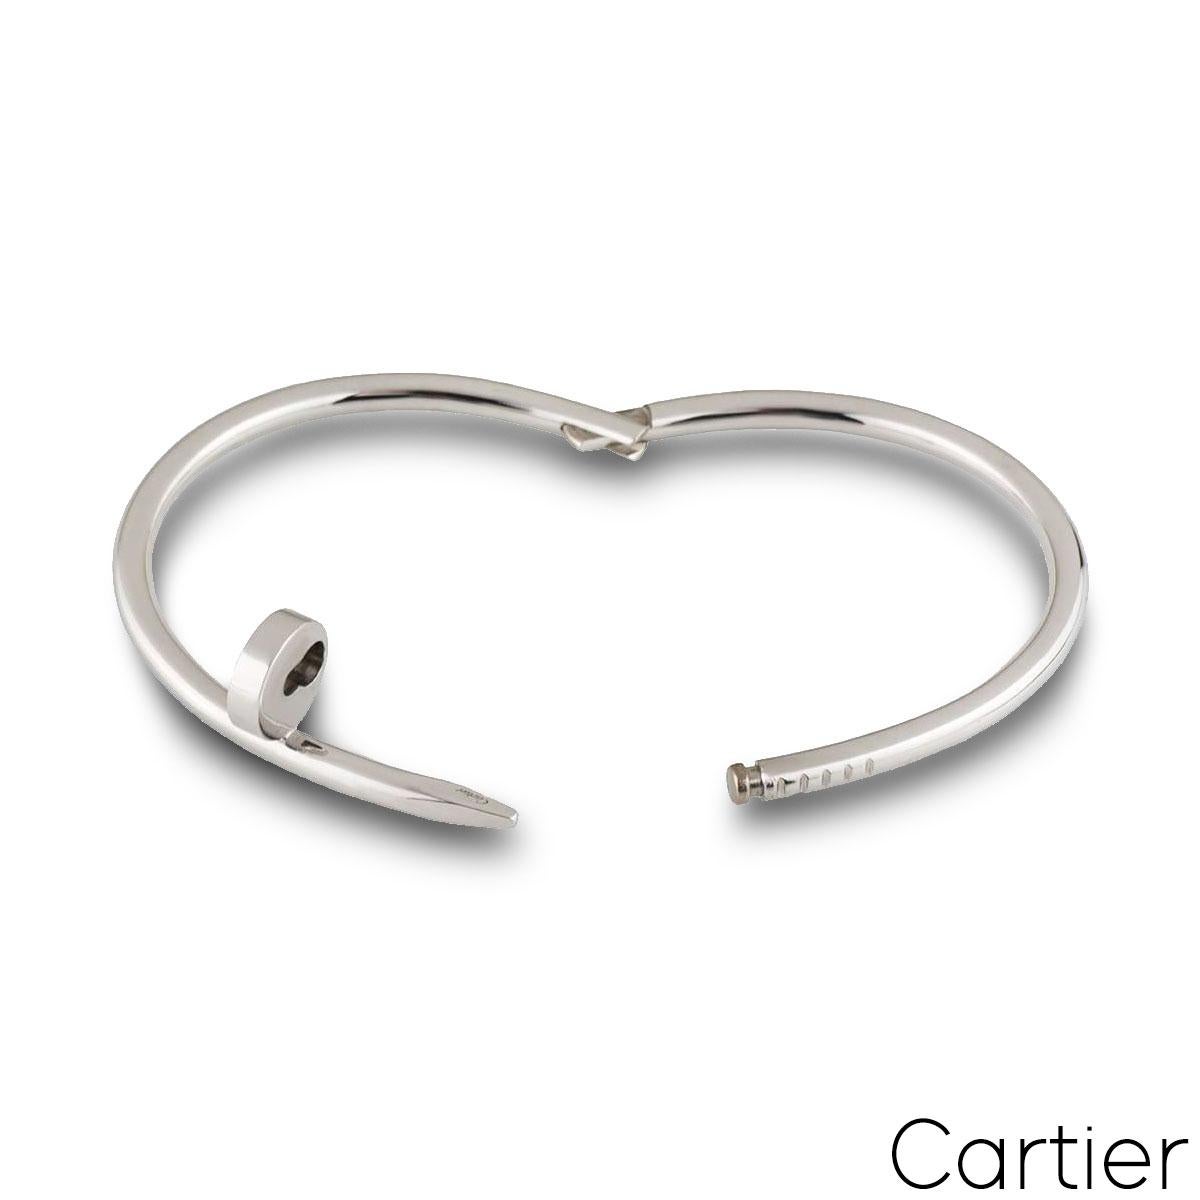 size 15 cartier bracelet